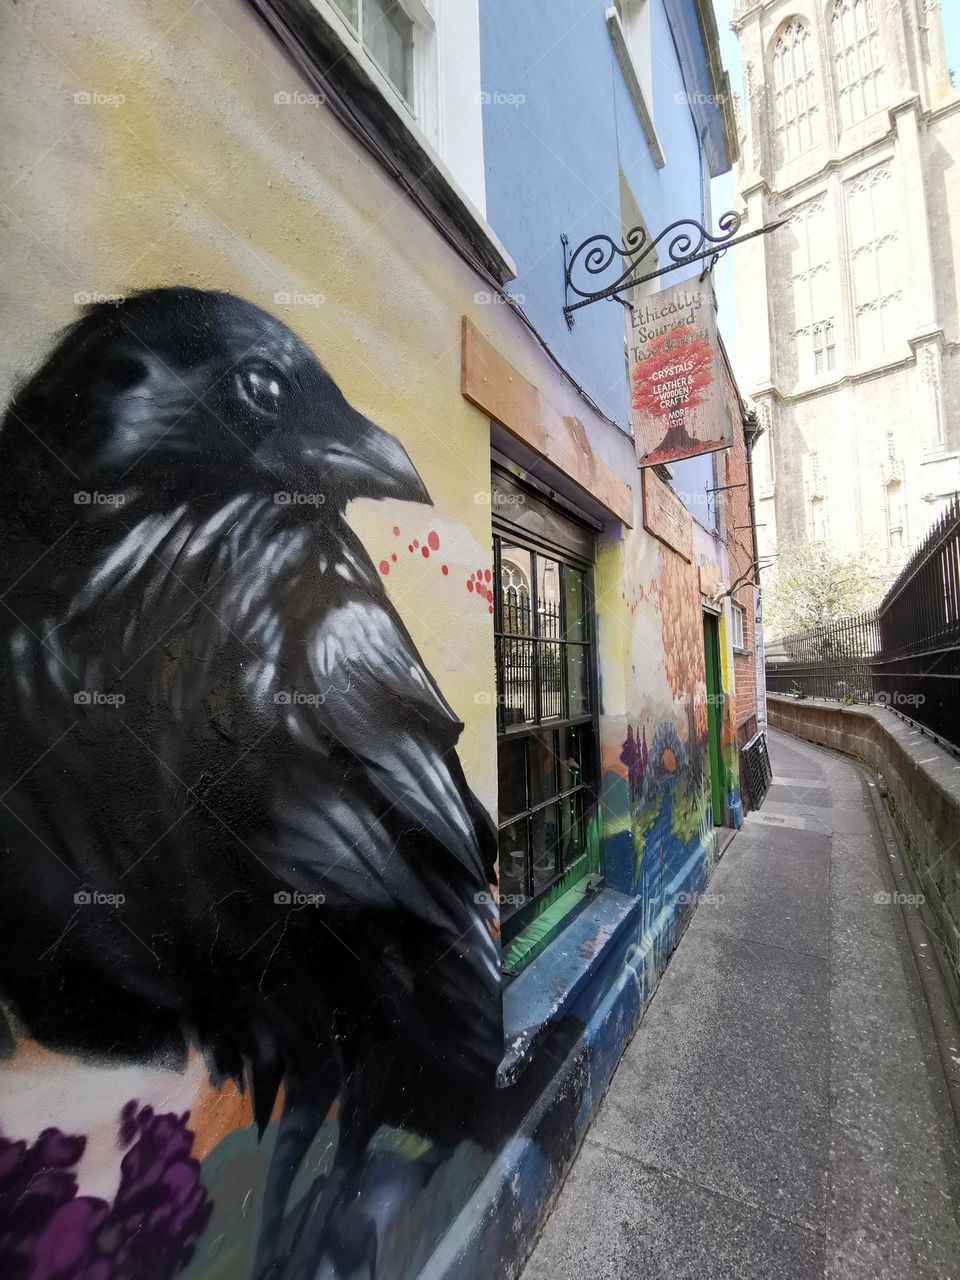 Visual street art. Amazing murals in Glastonbury (England).